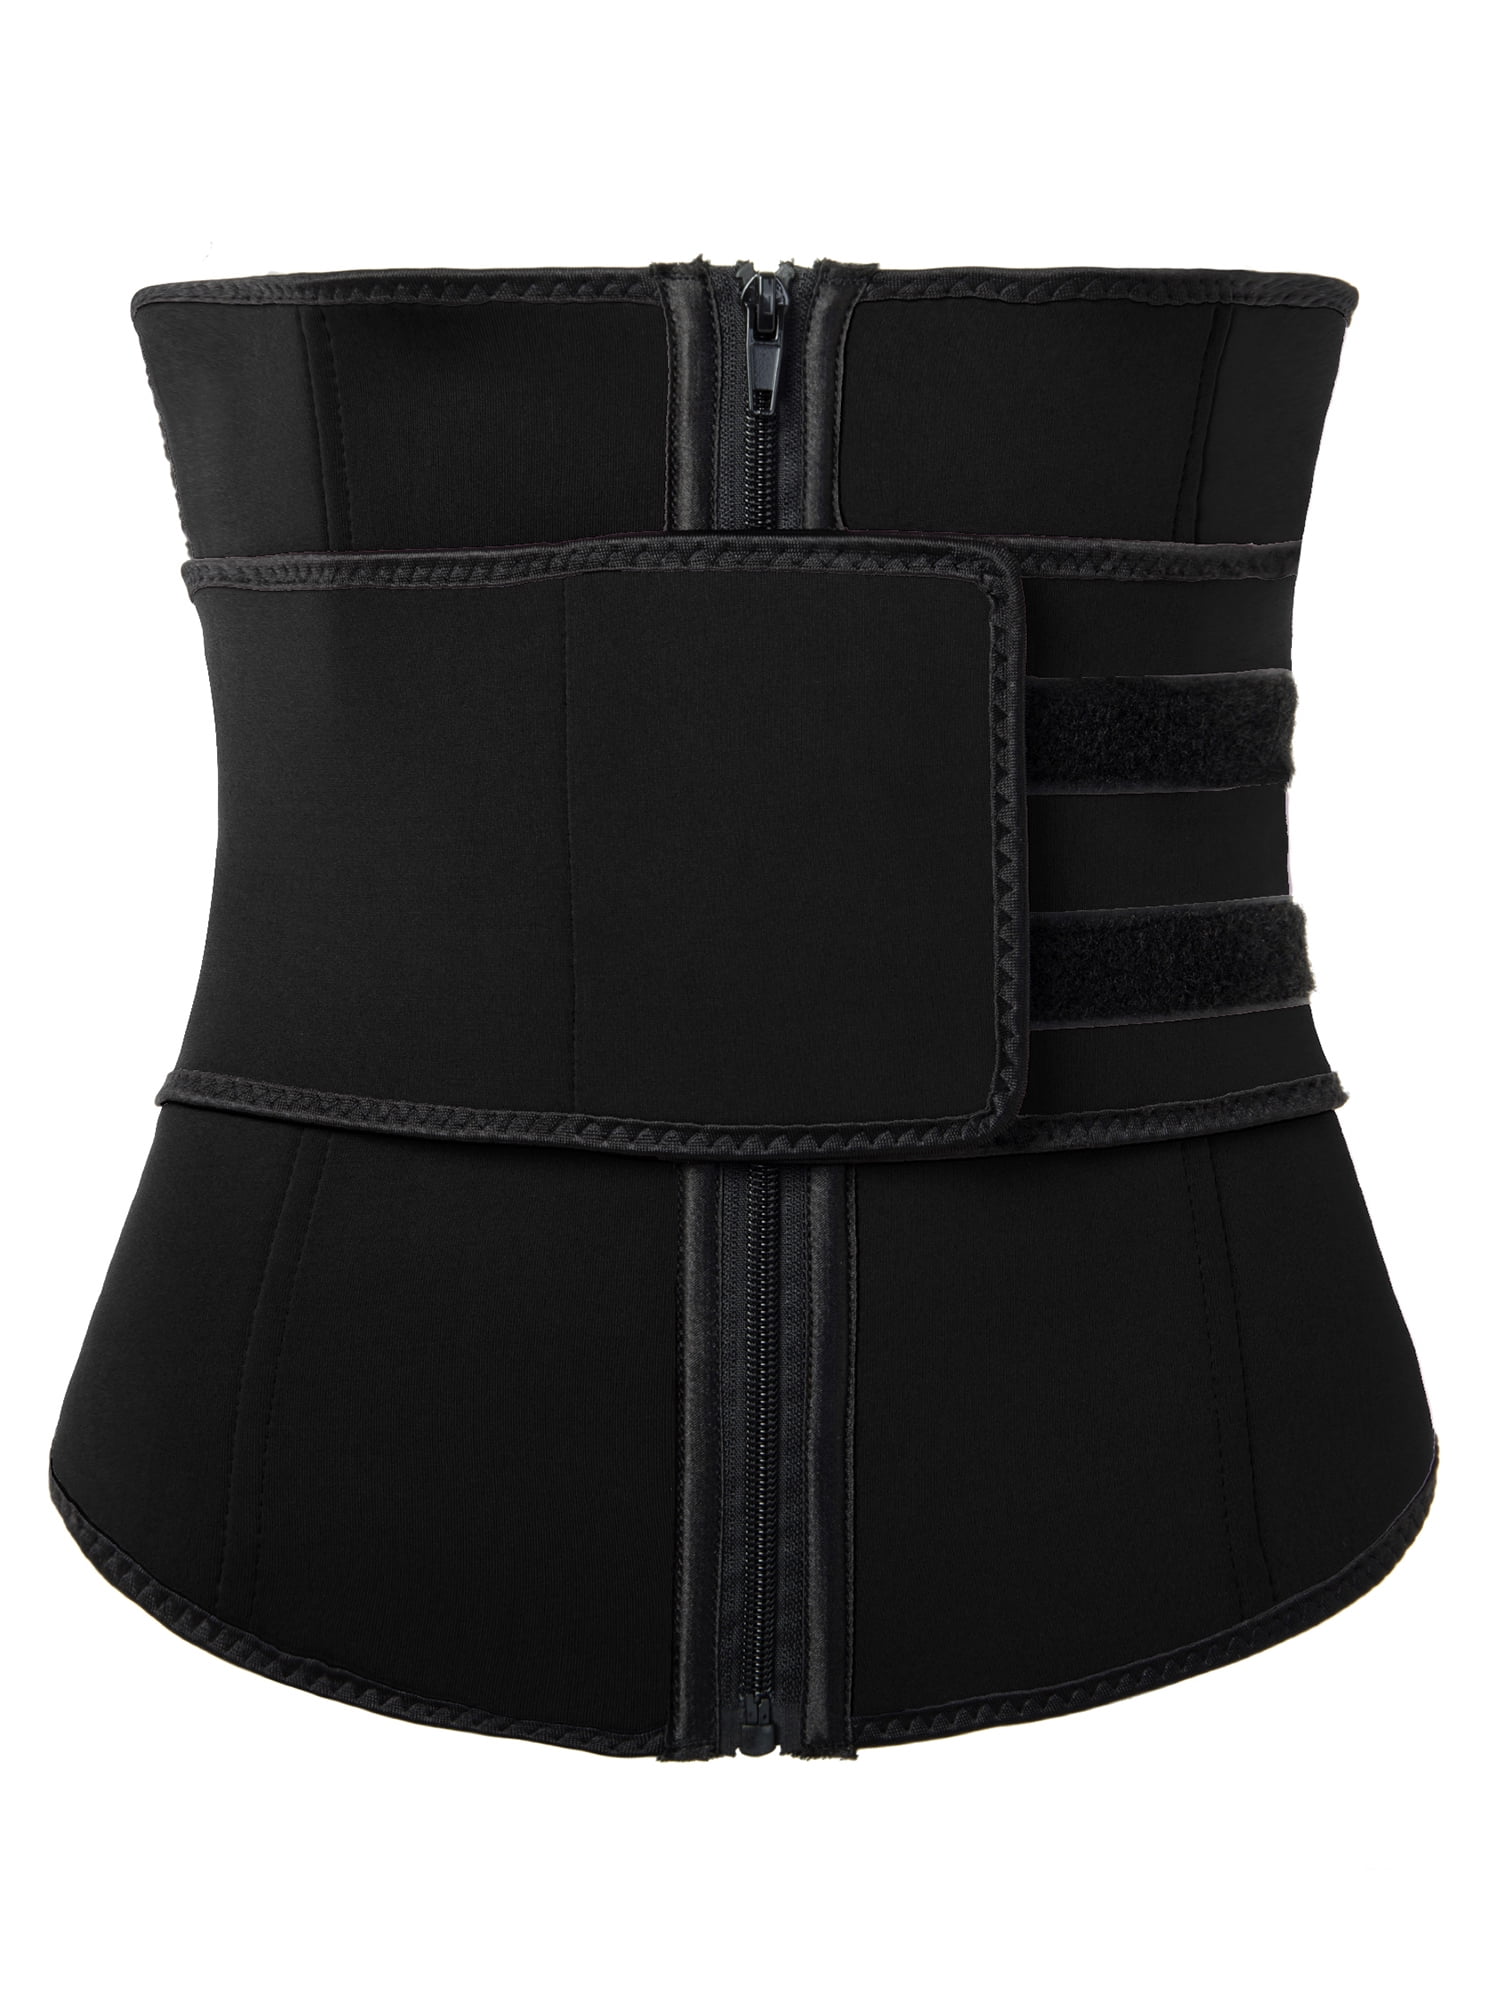 ALONG FIT Neoprene Sweat Sauna Vest for Women Weight Loss with Adjustable Waist Trainer Trimmer Belt